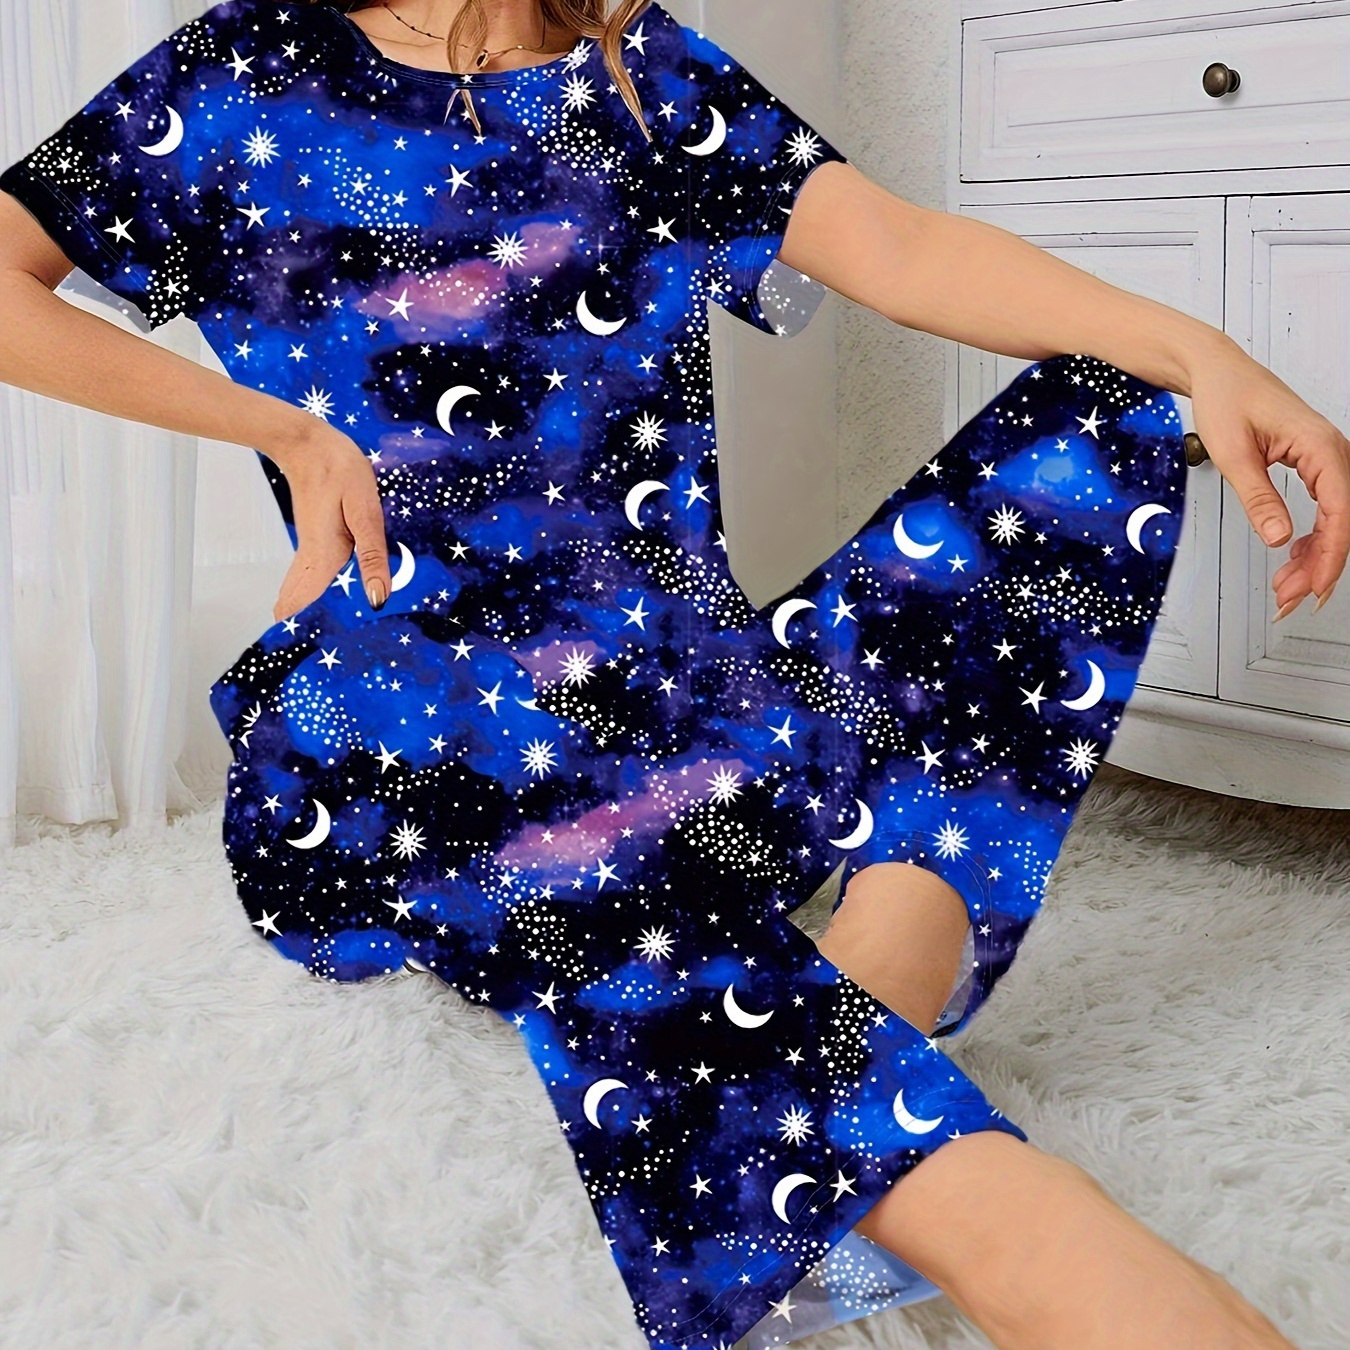 

Casual Star & Moon Print Tie Dye Pajama Set, Short Sleeve Crew Neck Top & Elastic Pants, Women's Sleepwear & Loungewear